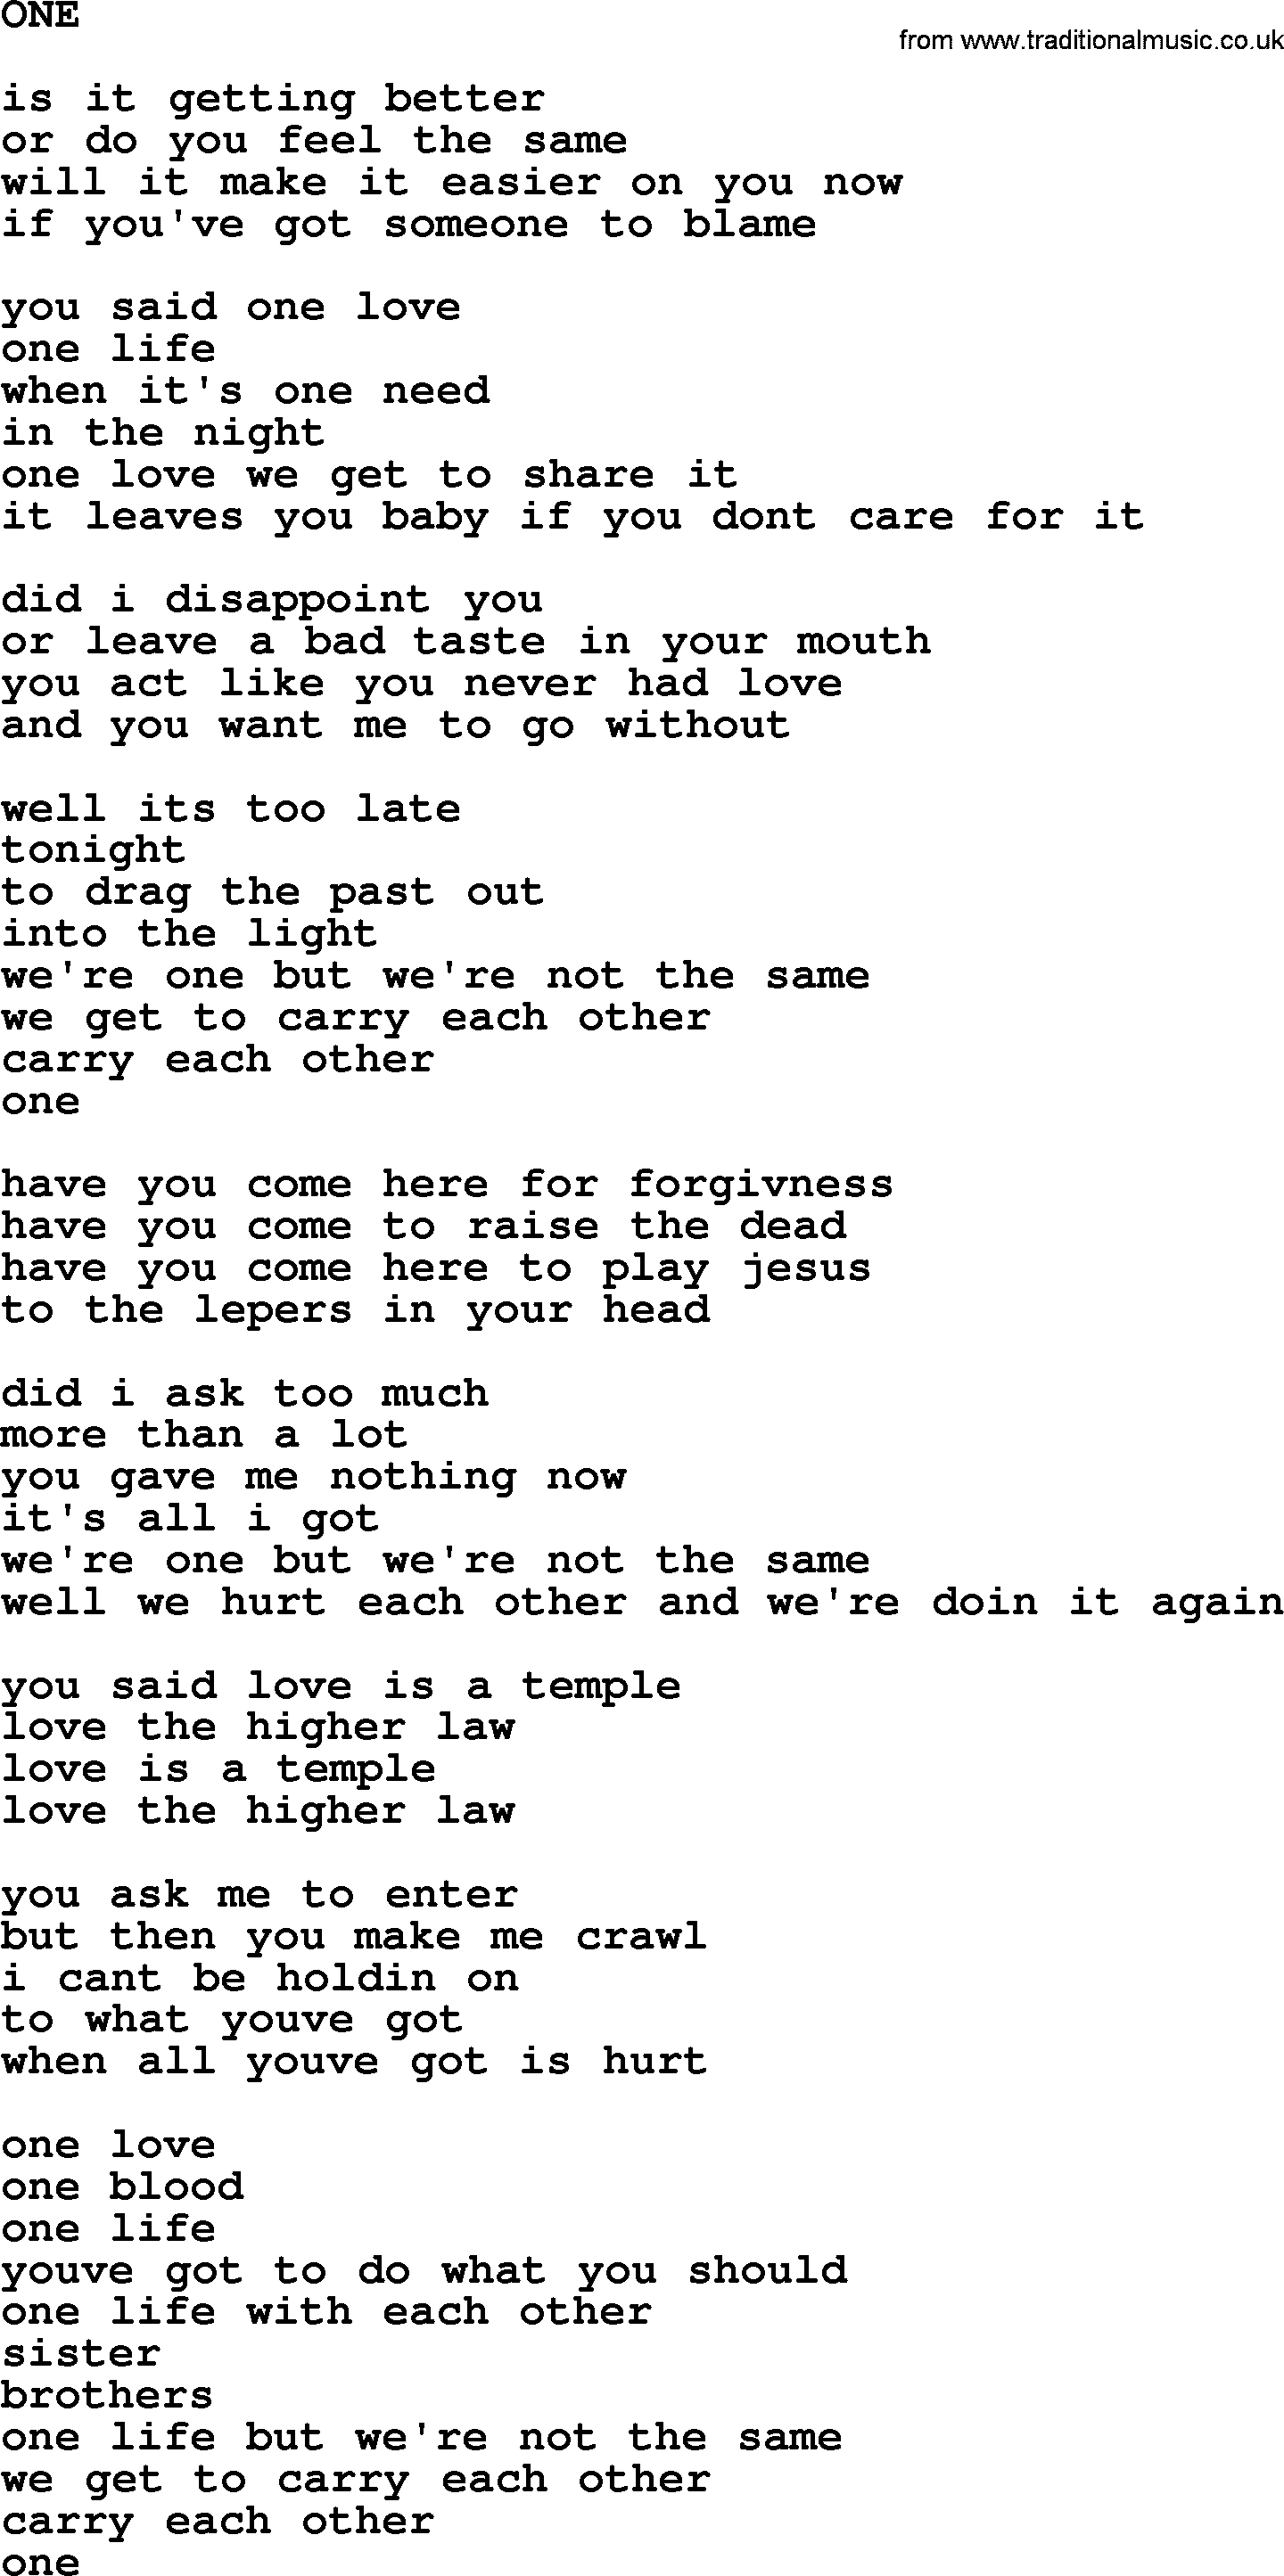 Johnny Cash song One.txt lyrics